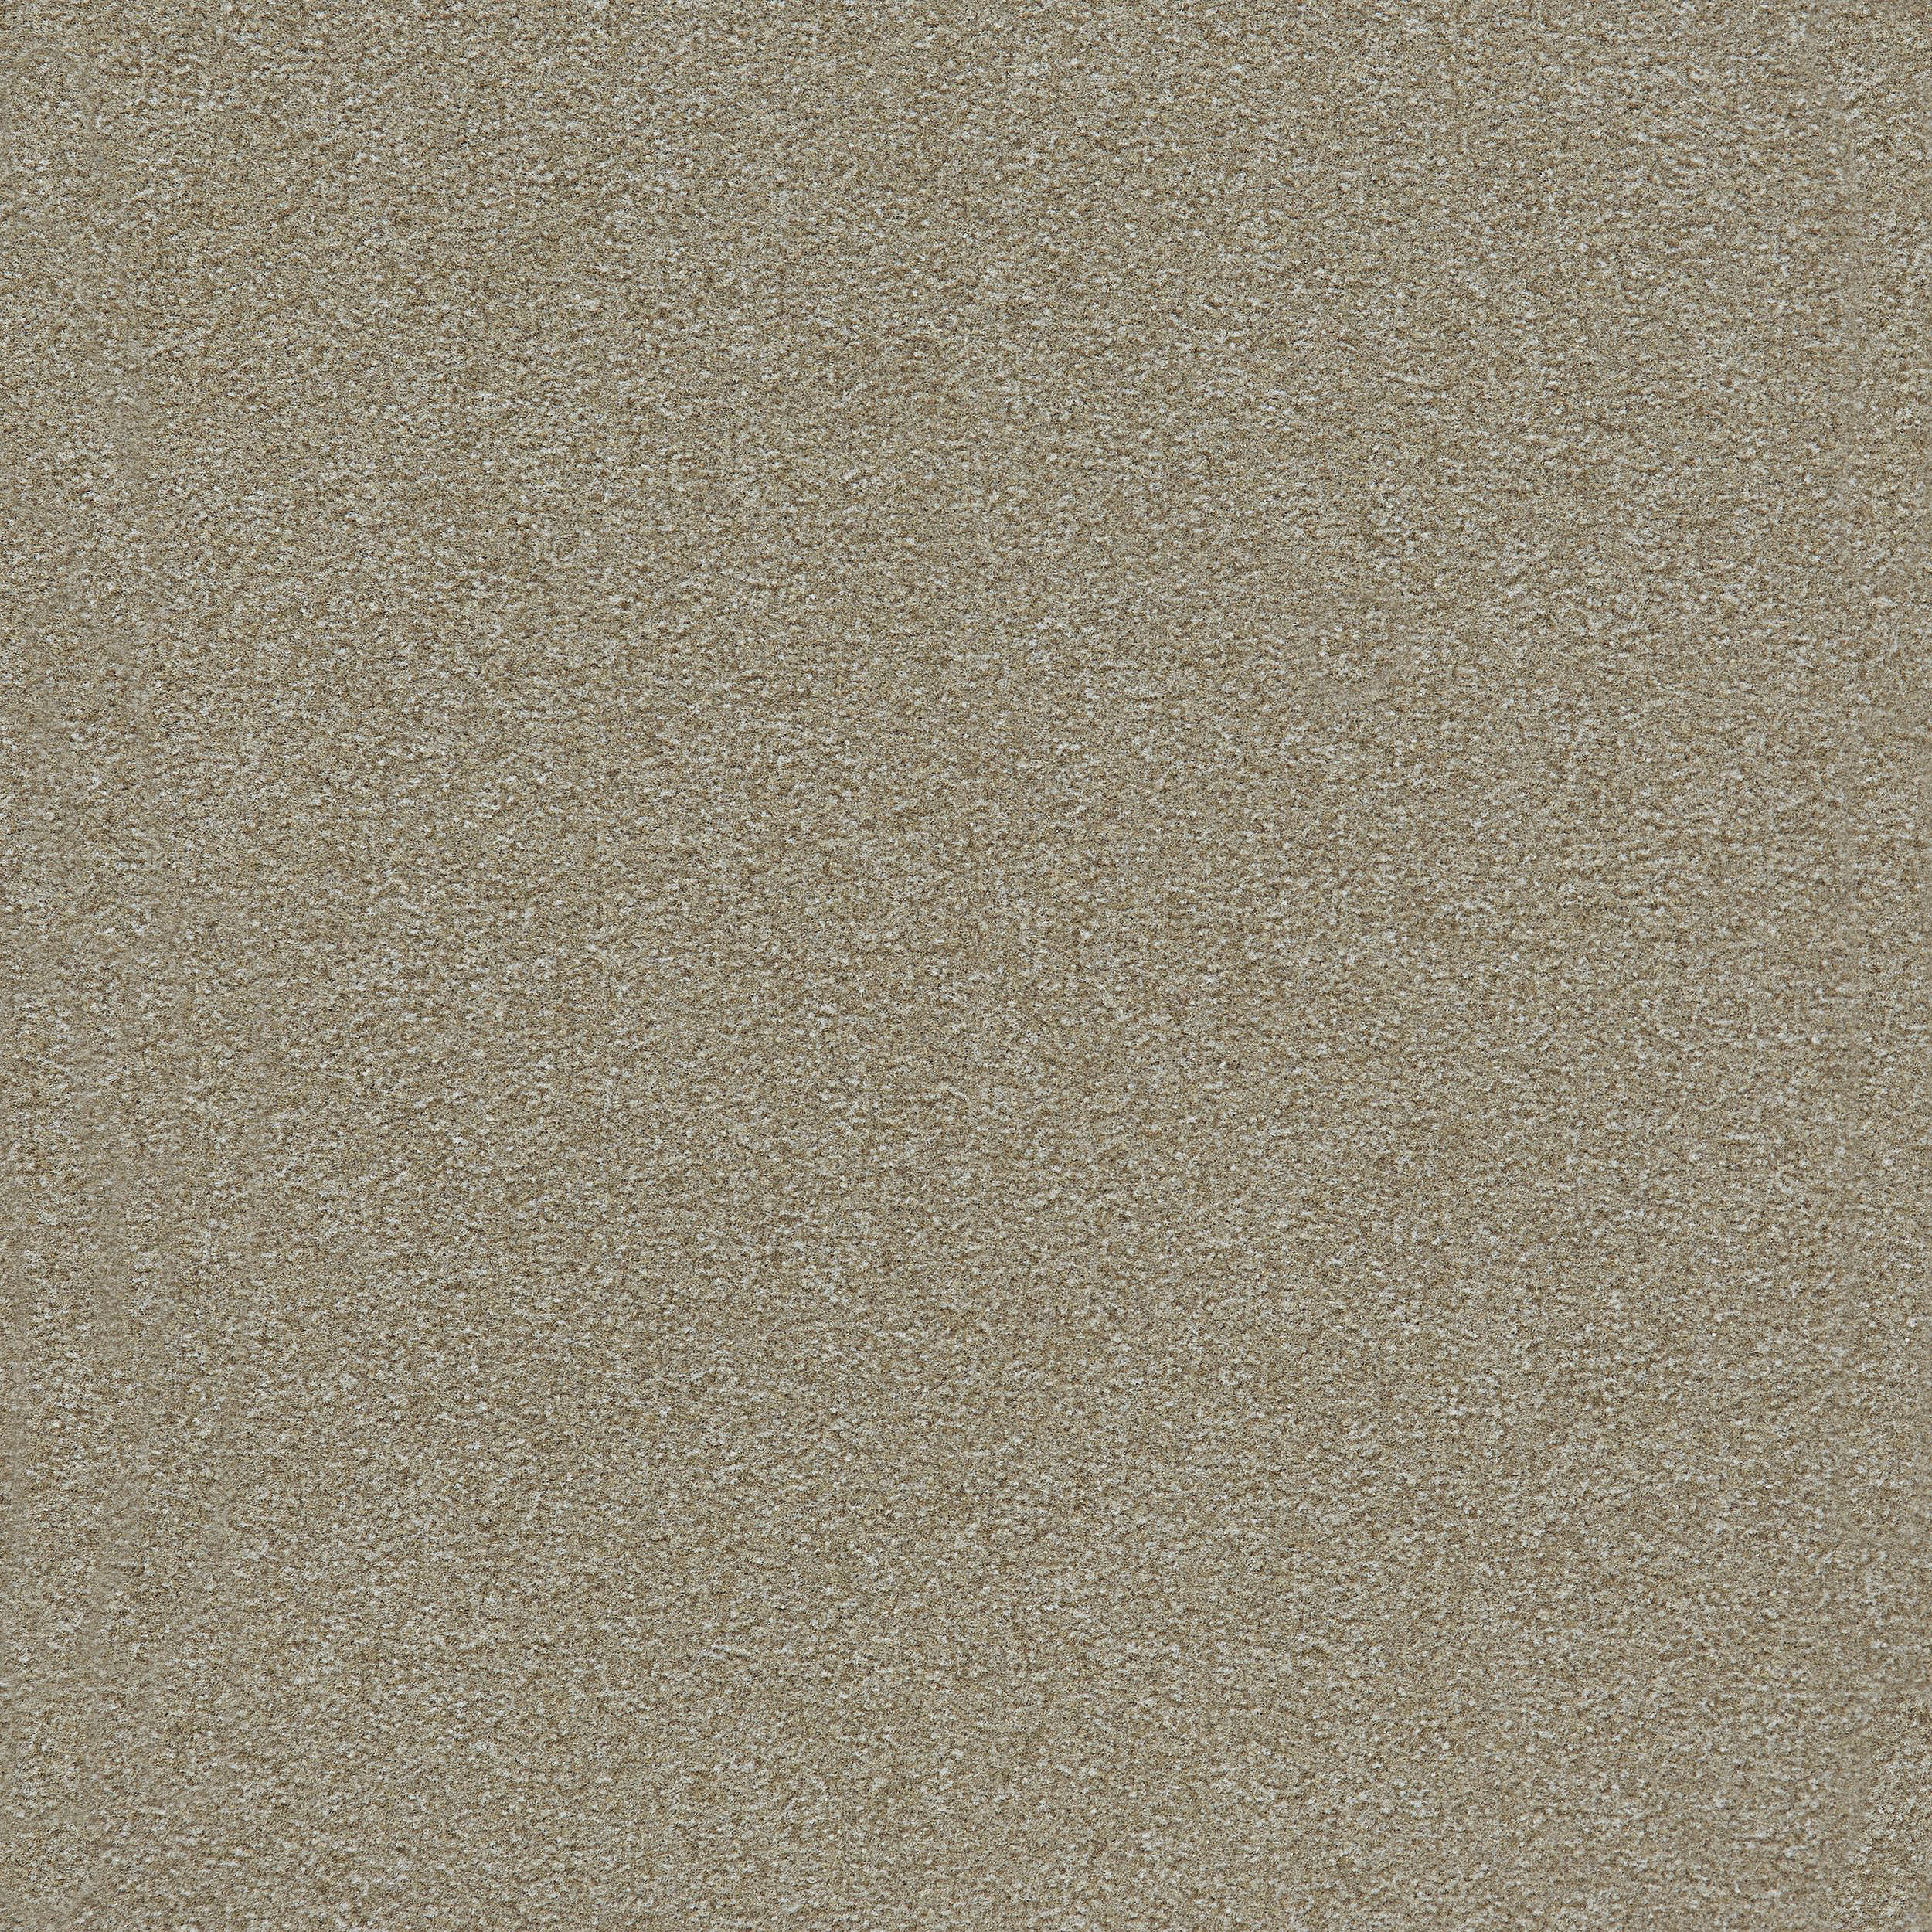 Heuga 725 Carpet Tile In Oyster afbeeldingnummer 7